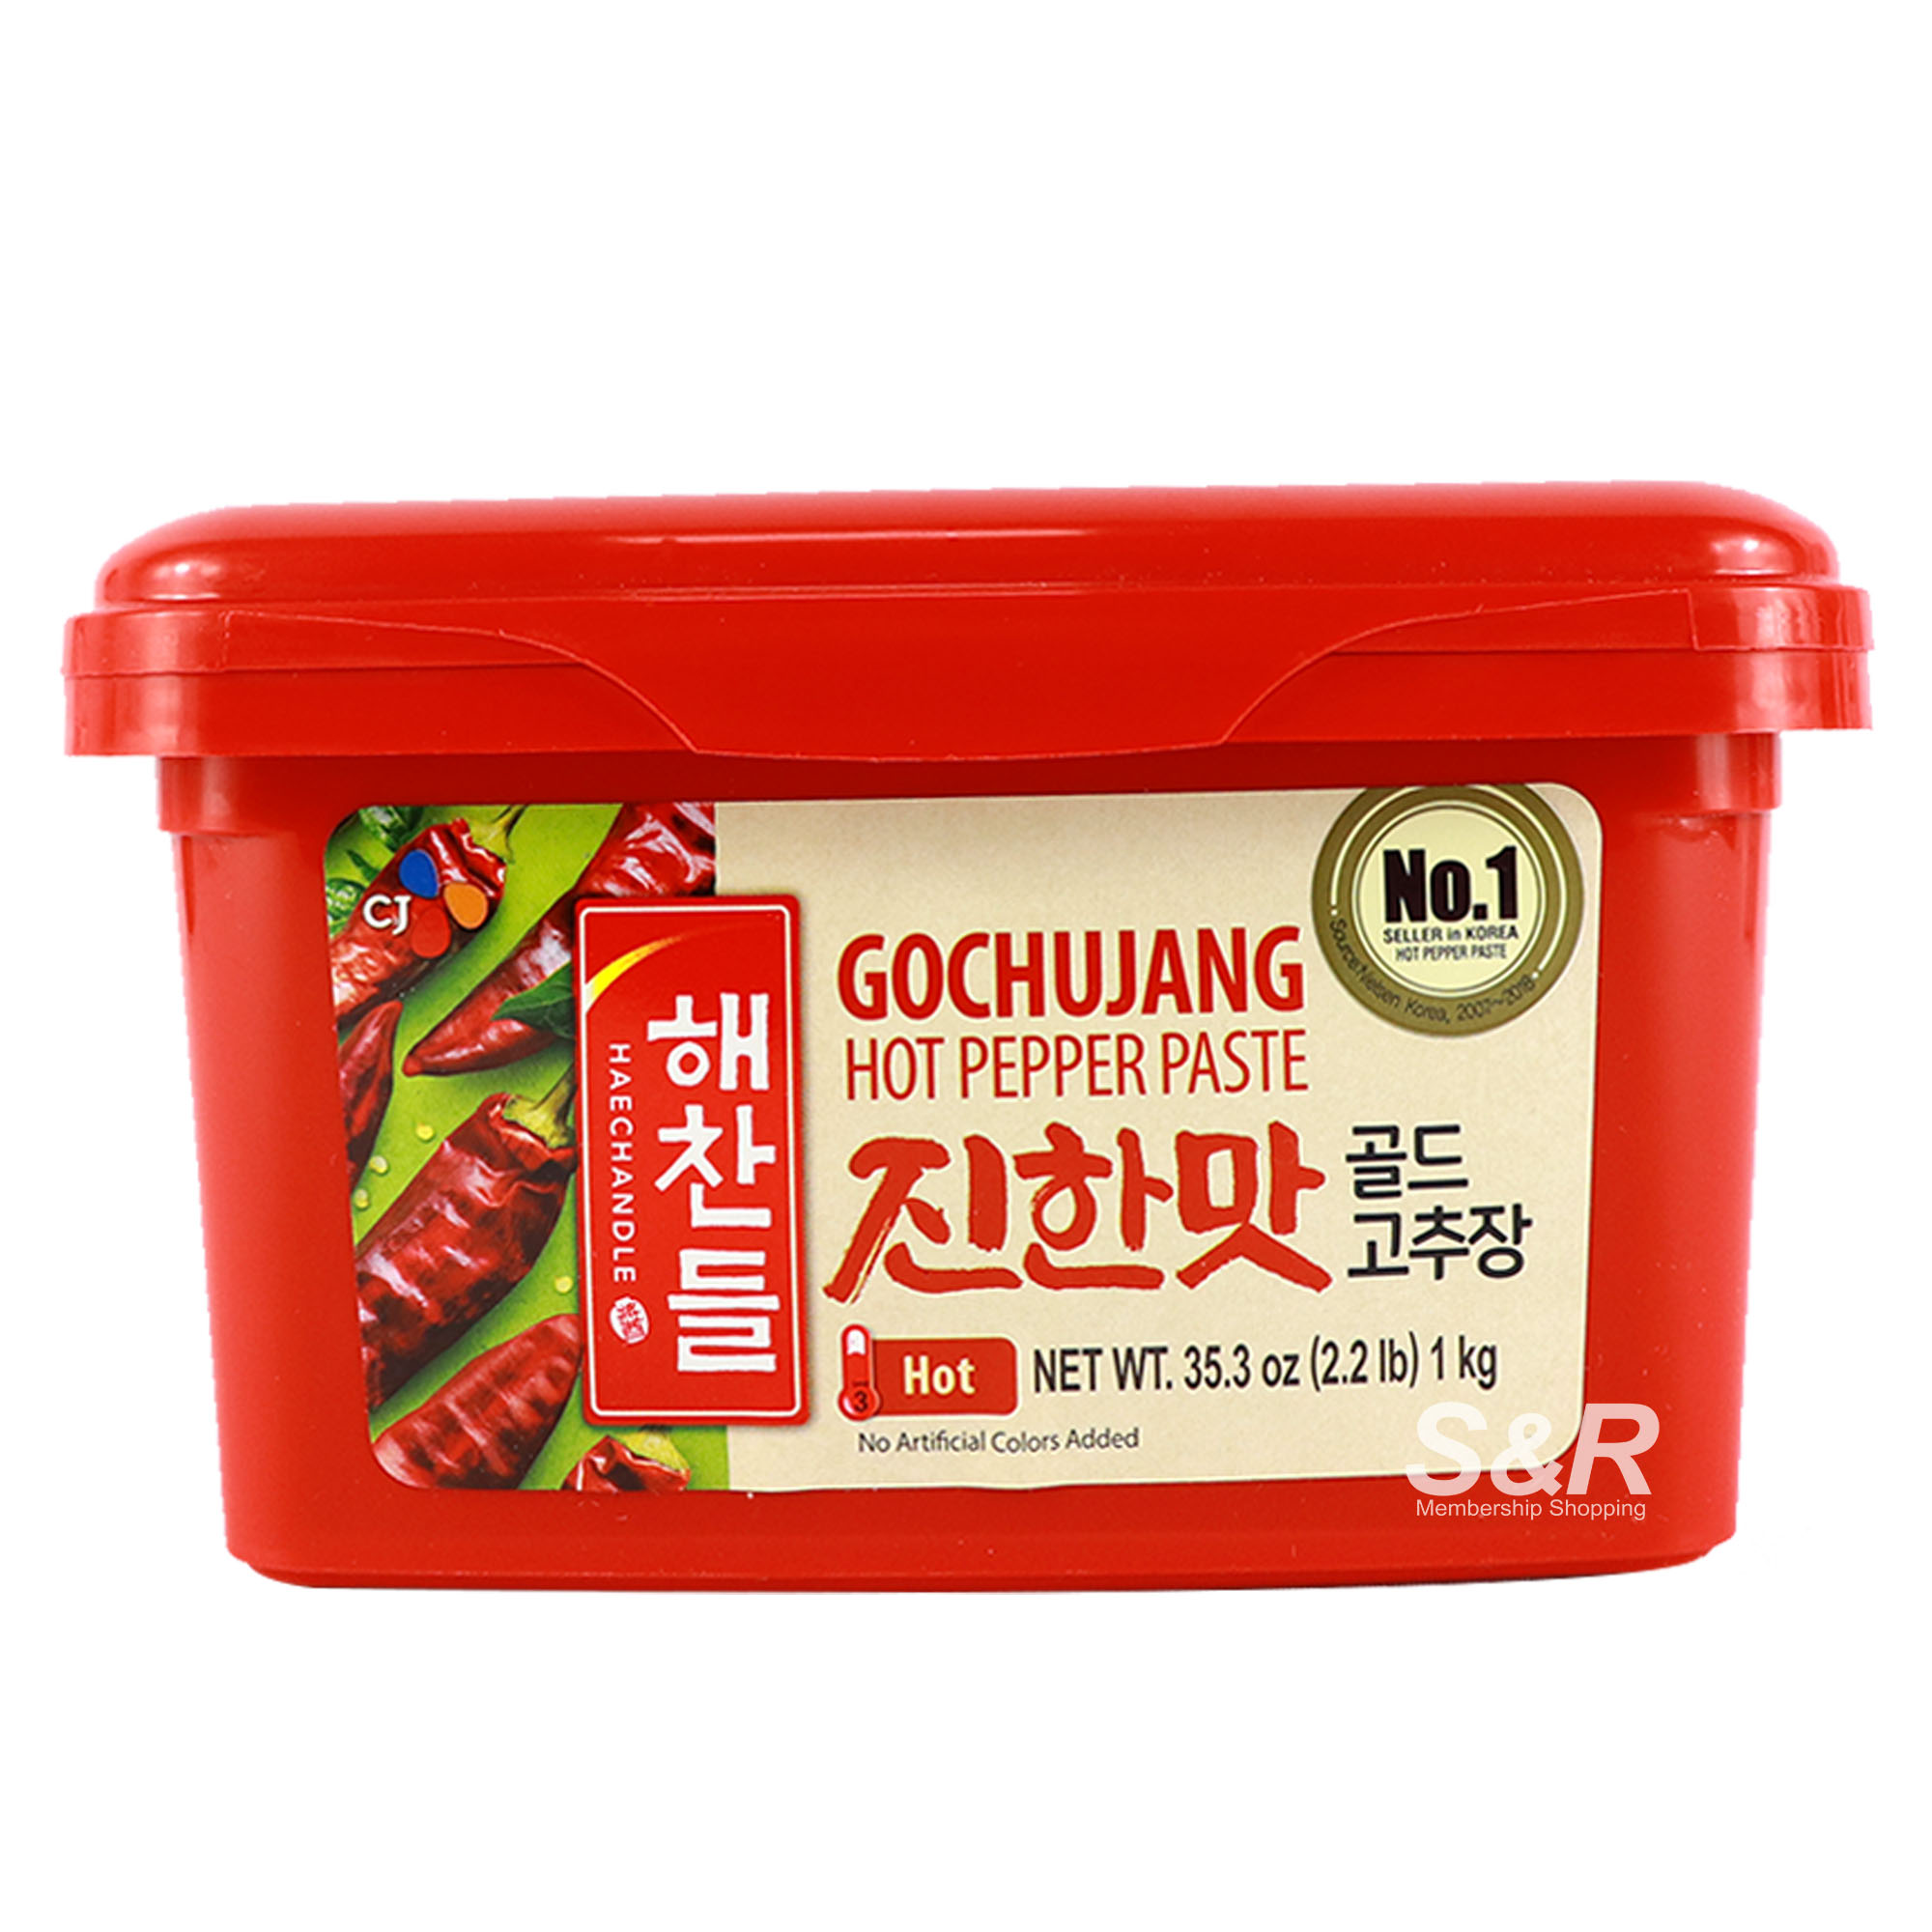 CJ Gochujang Hot Pepper Paste 1kg